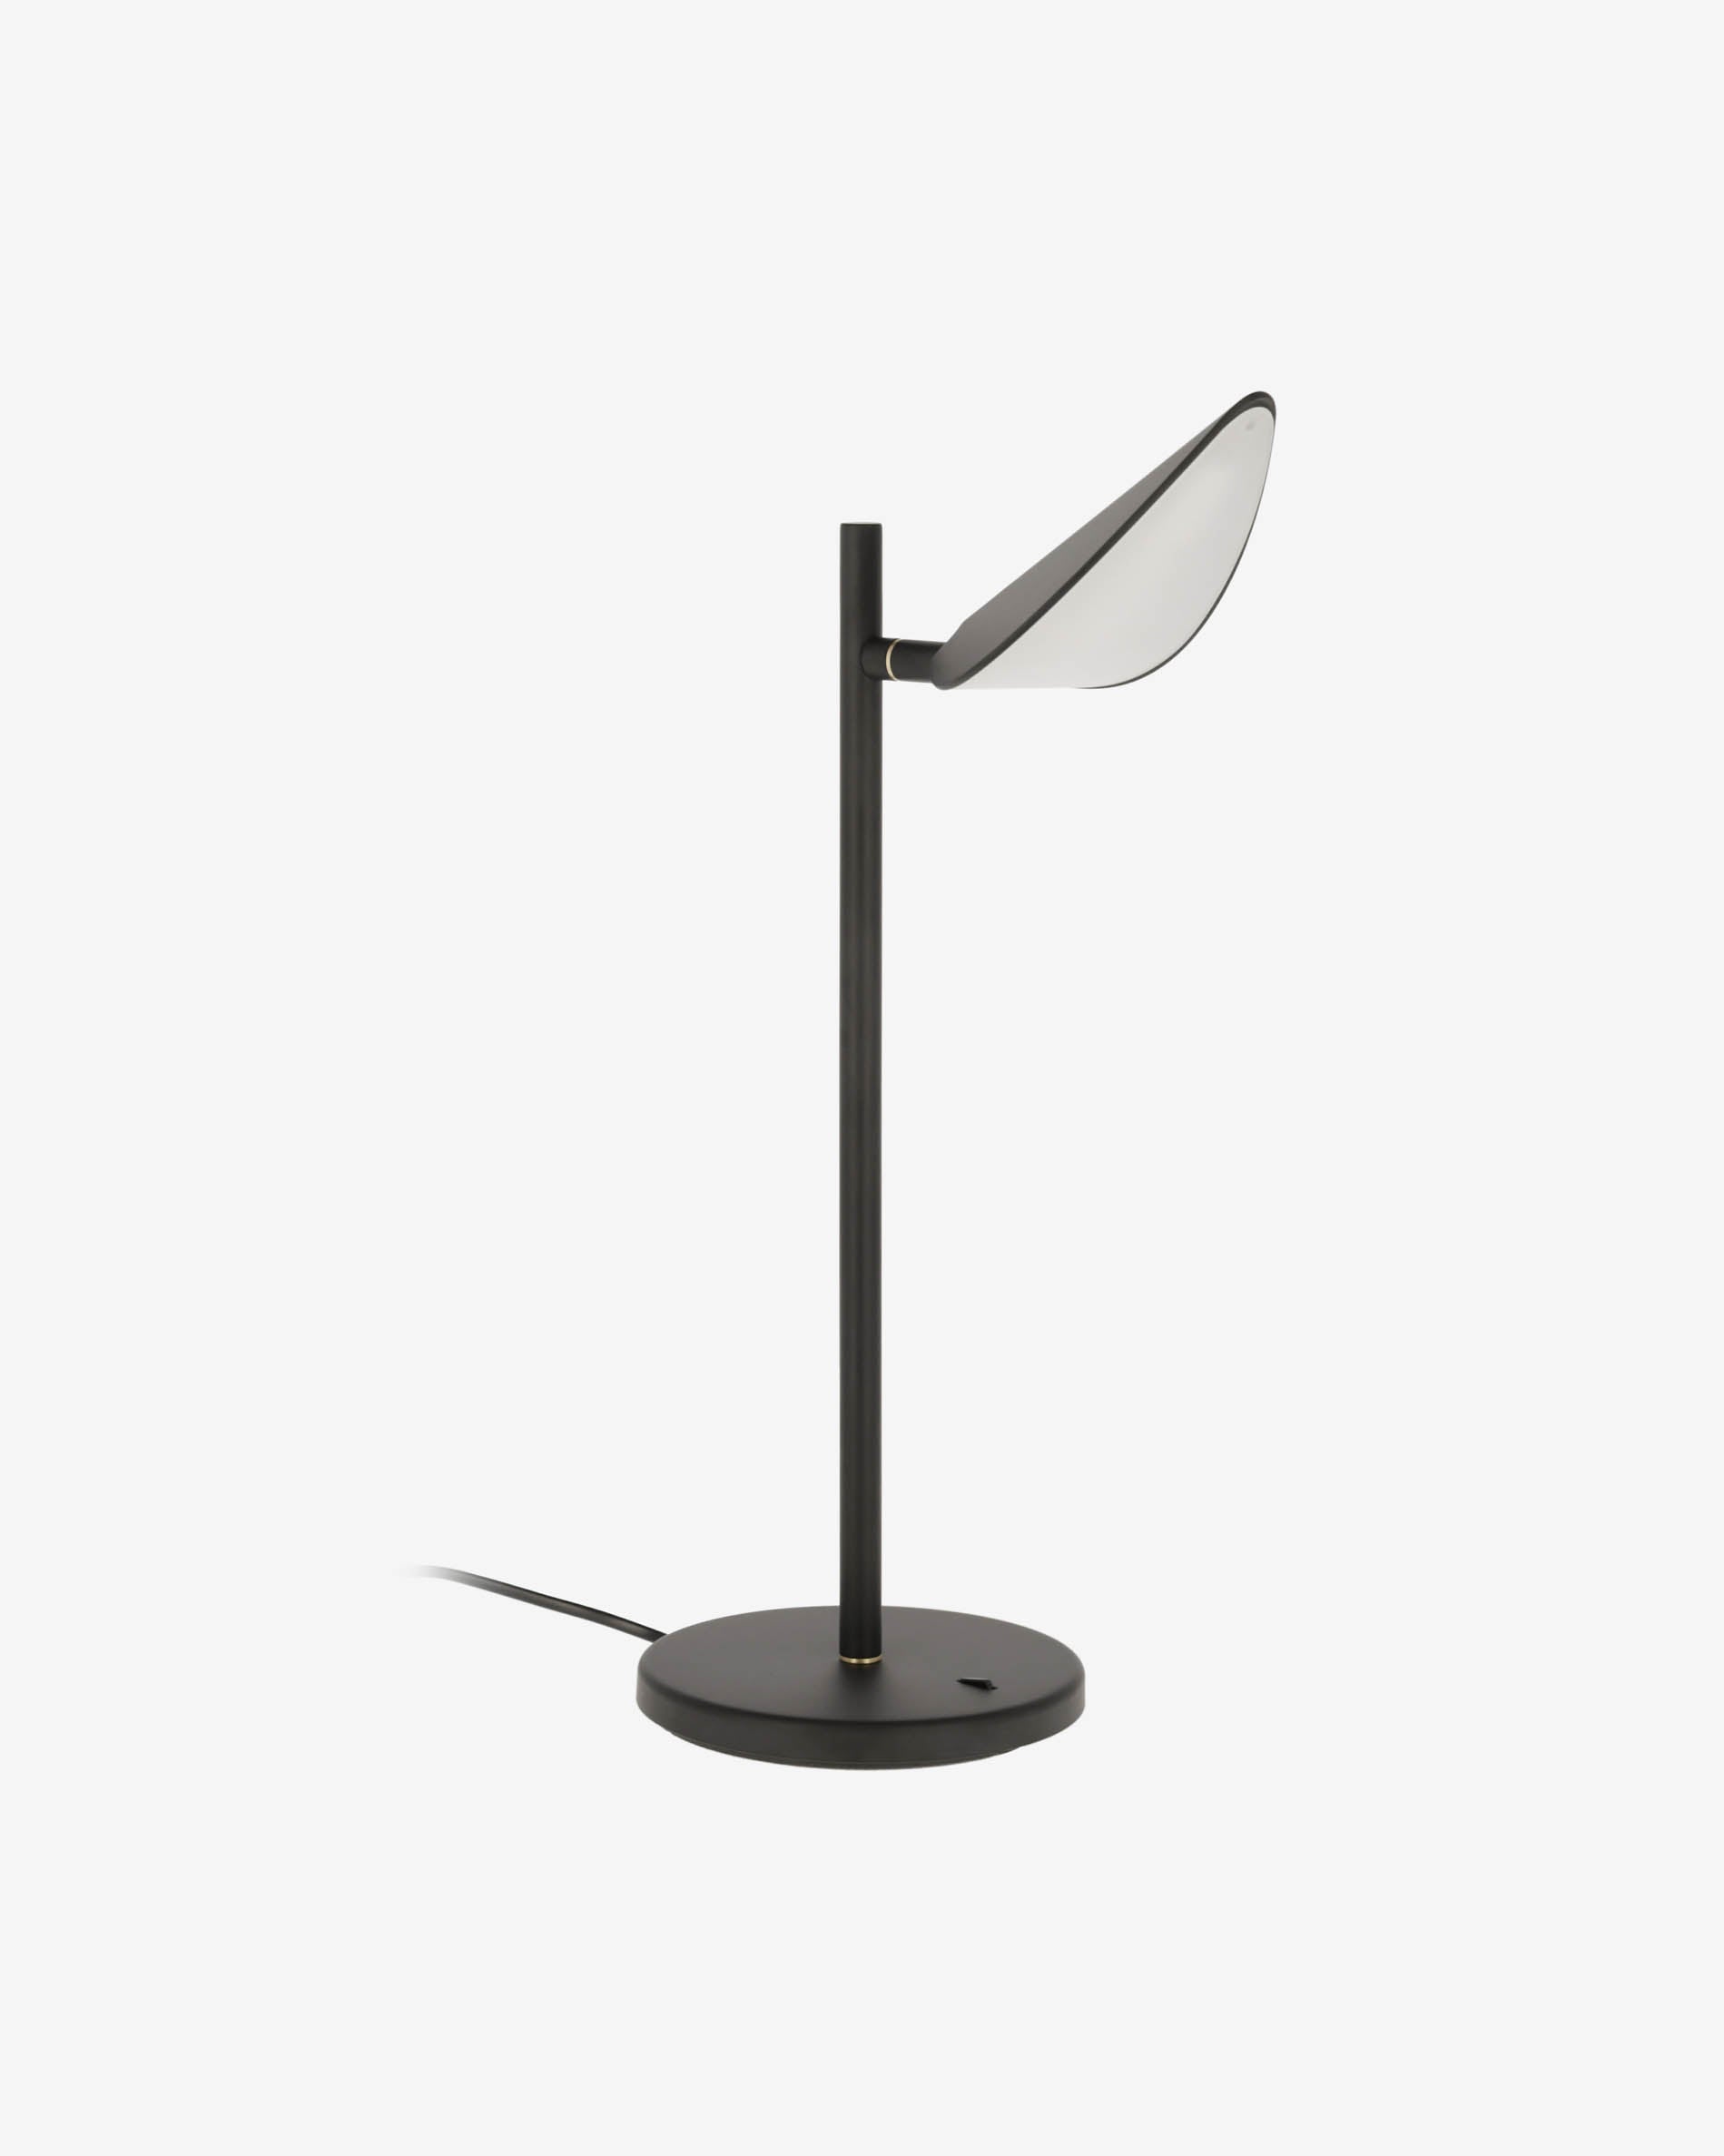 Veleira steel table lamp with UK adapter